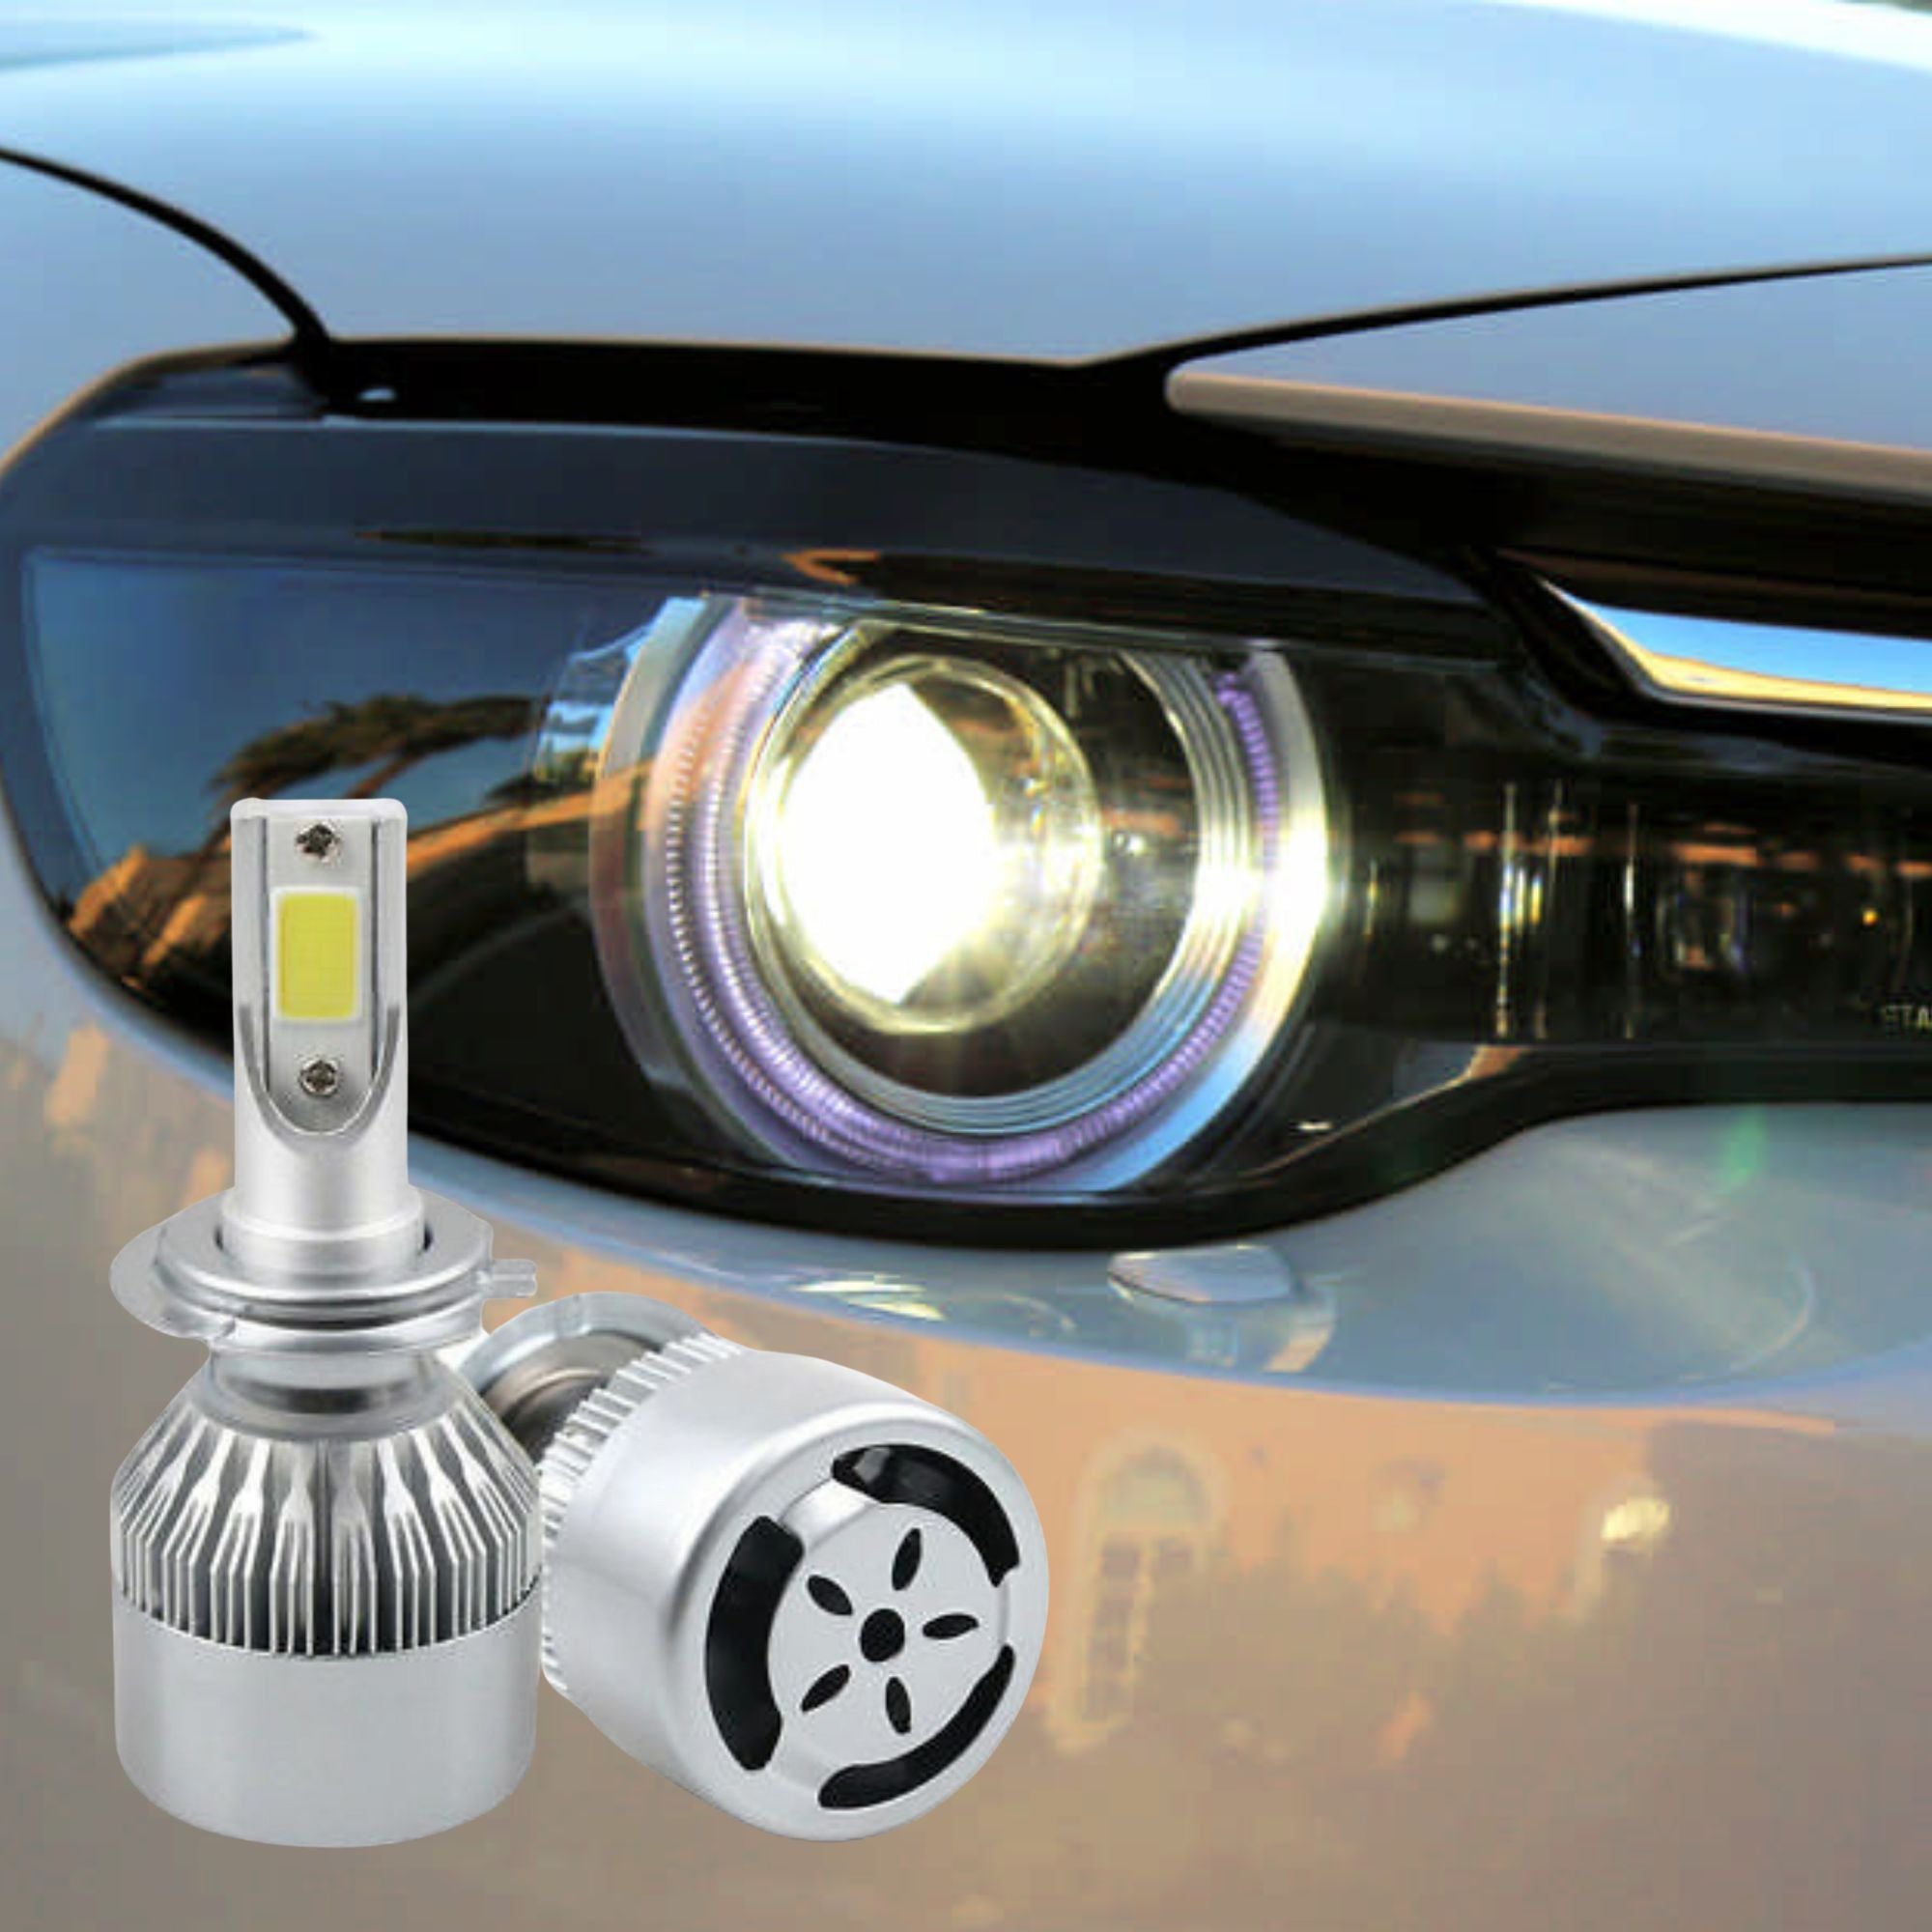 Kit de luces LED C6 H7, de 3800 lm, 36 W, 6000 K, blanco frío, para coche y  moto : : Coche y moto